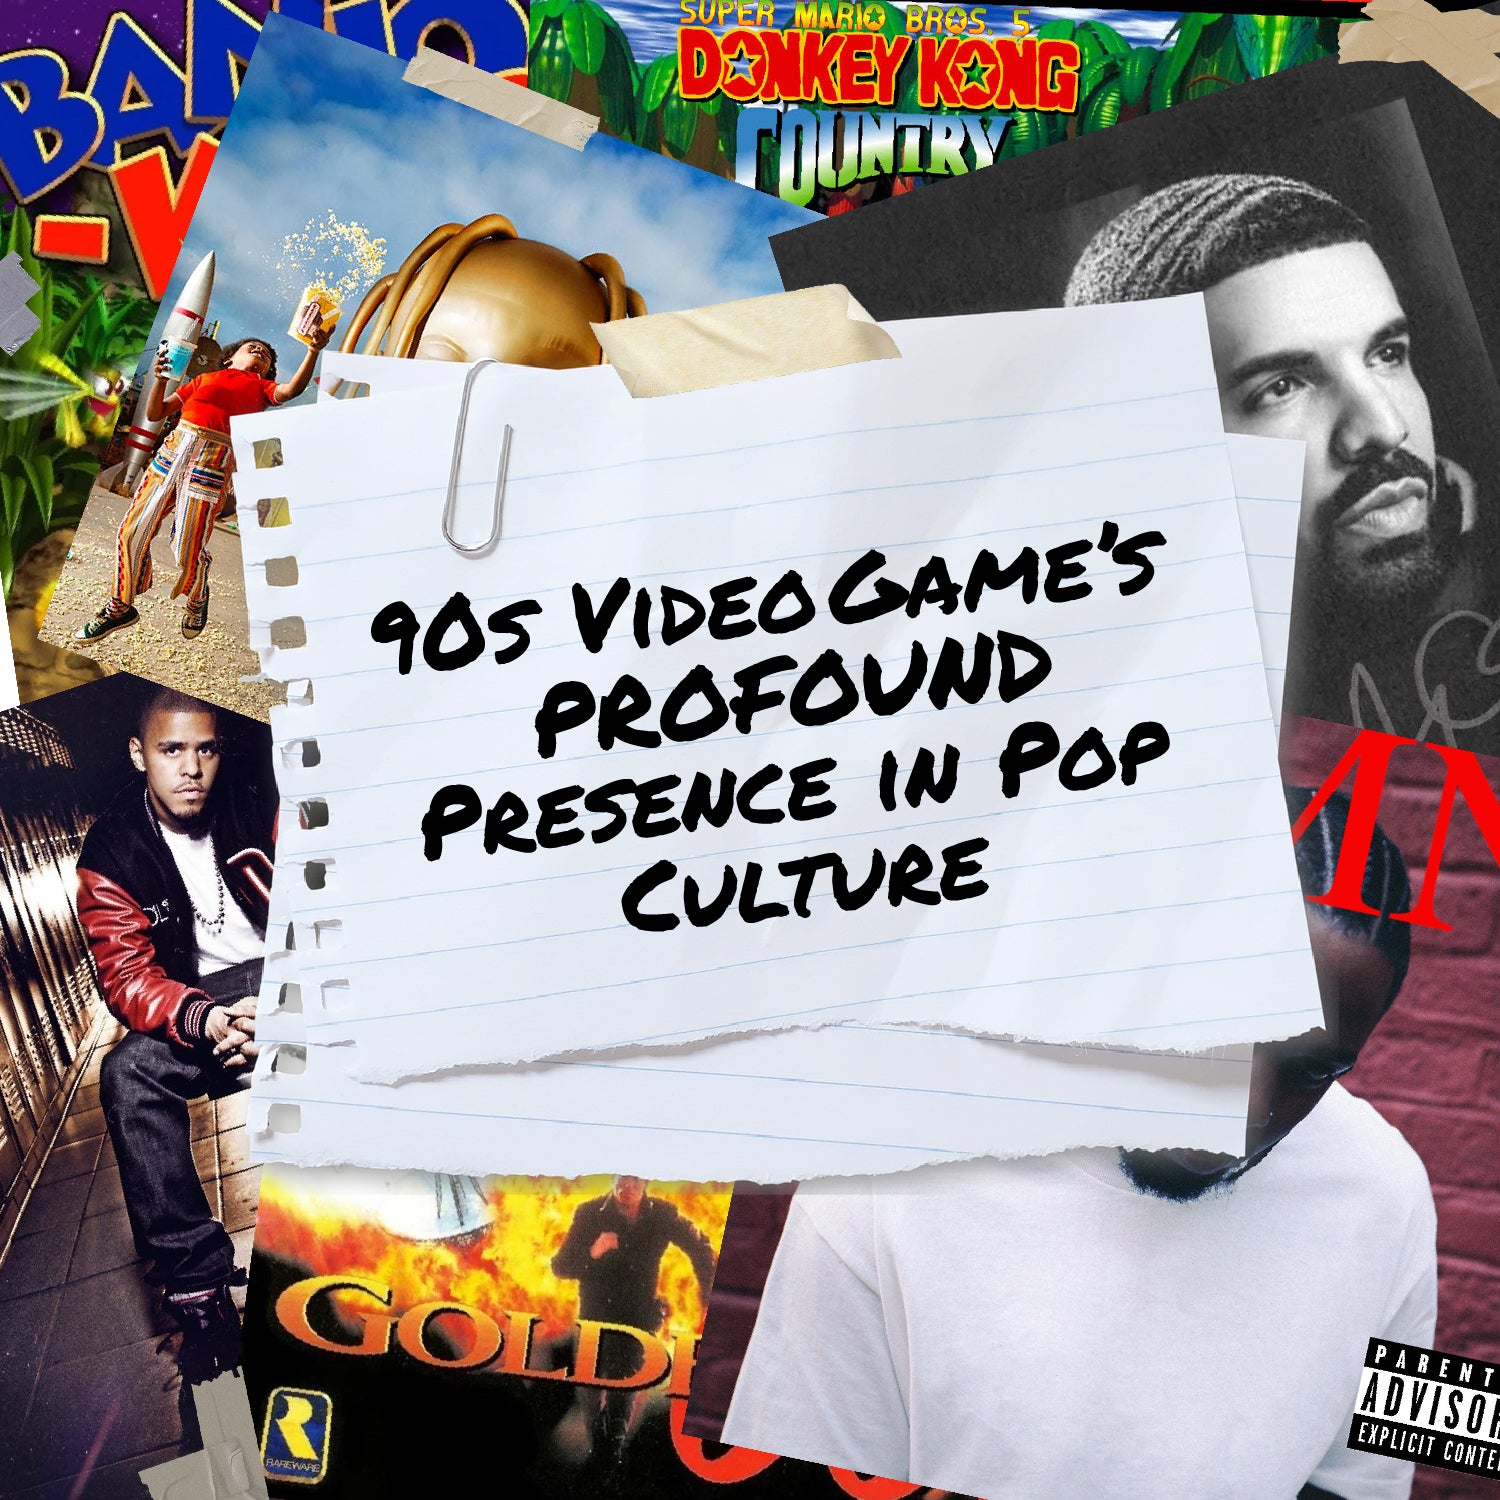 90s Video Games Profound Presence in Pop Culture